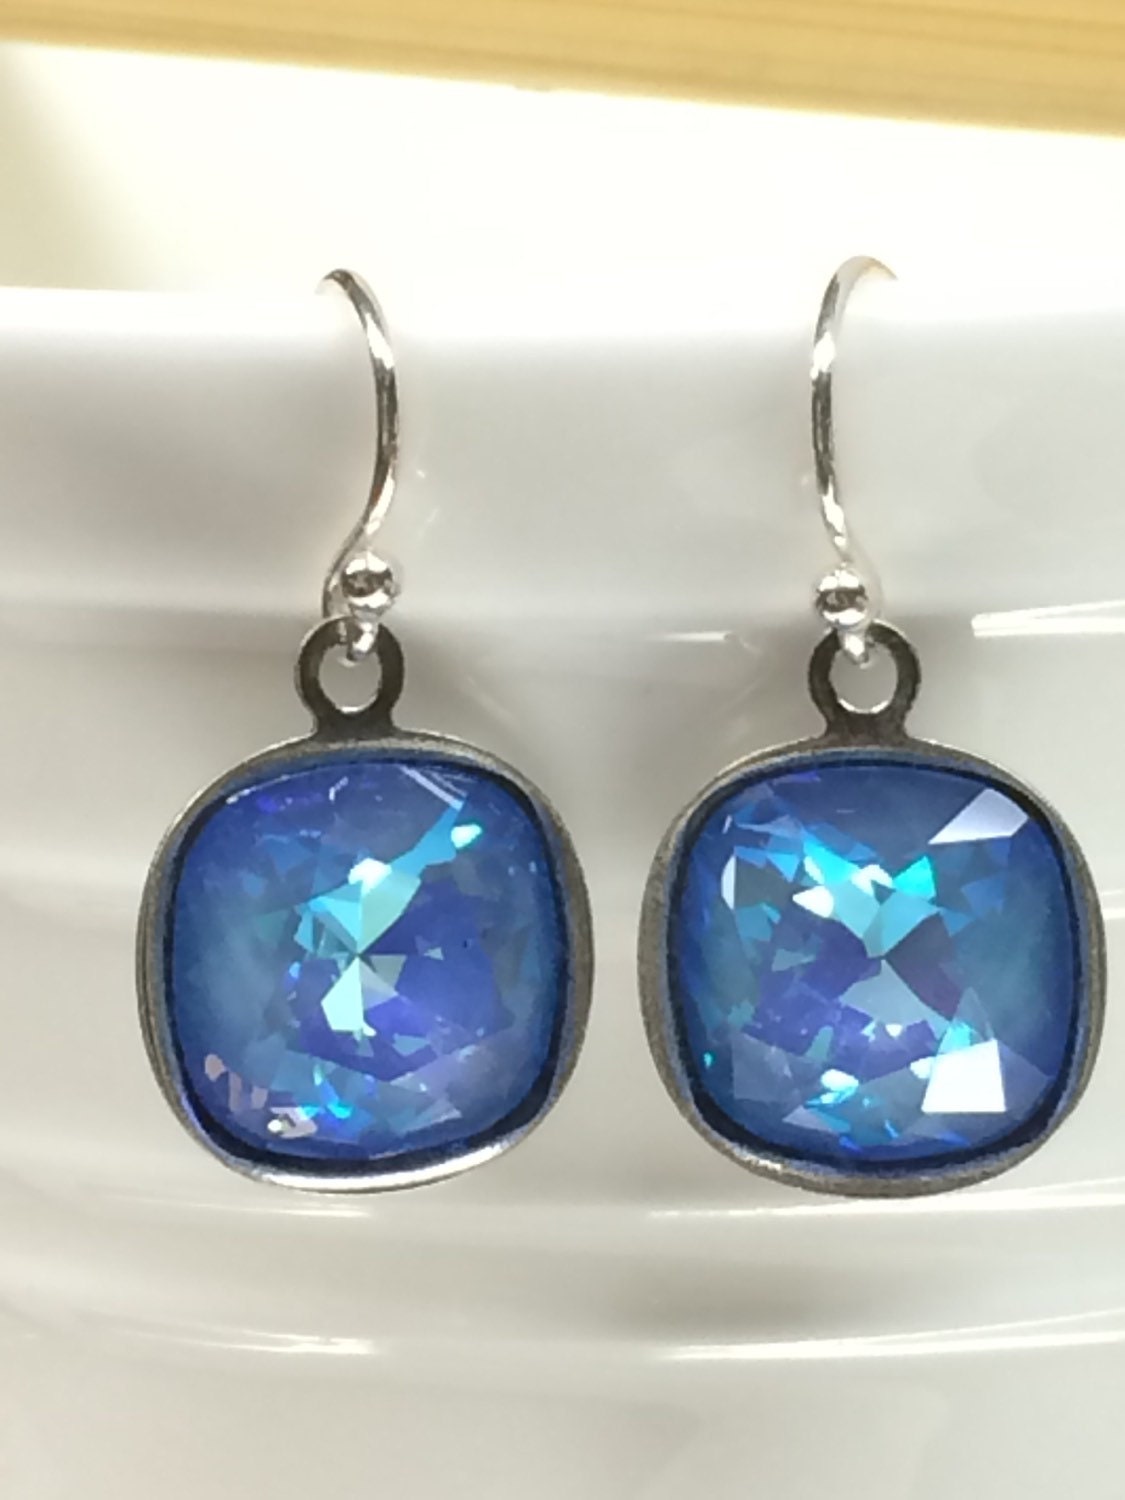 50% off clearance Ultra Blue Swarovski Crystal Earrings